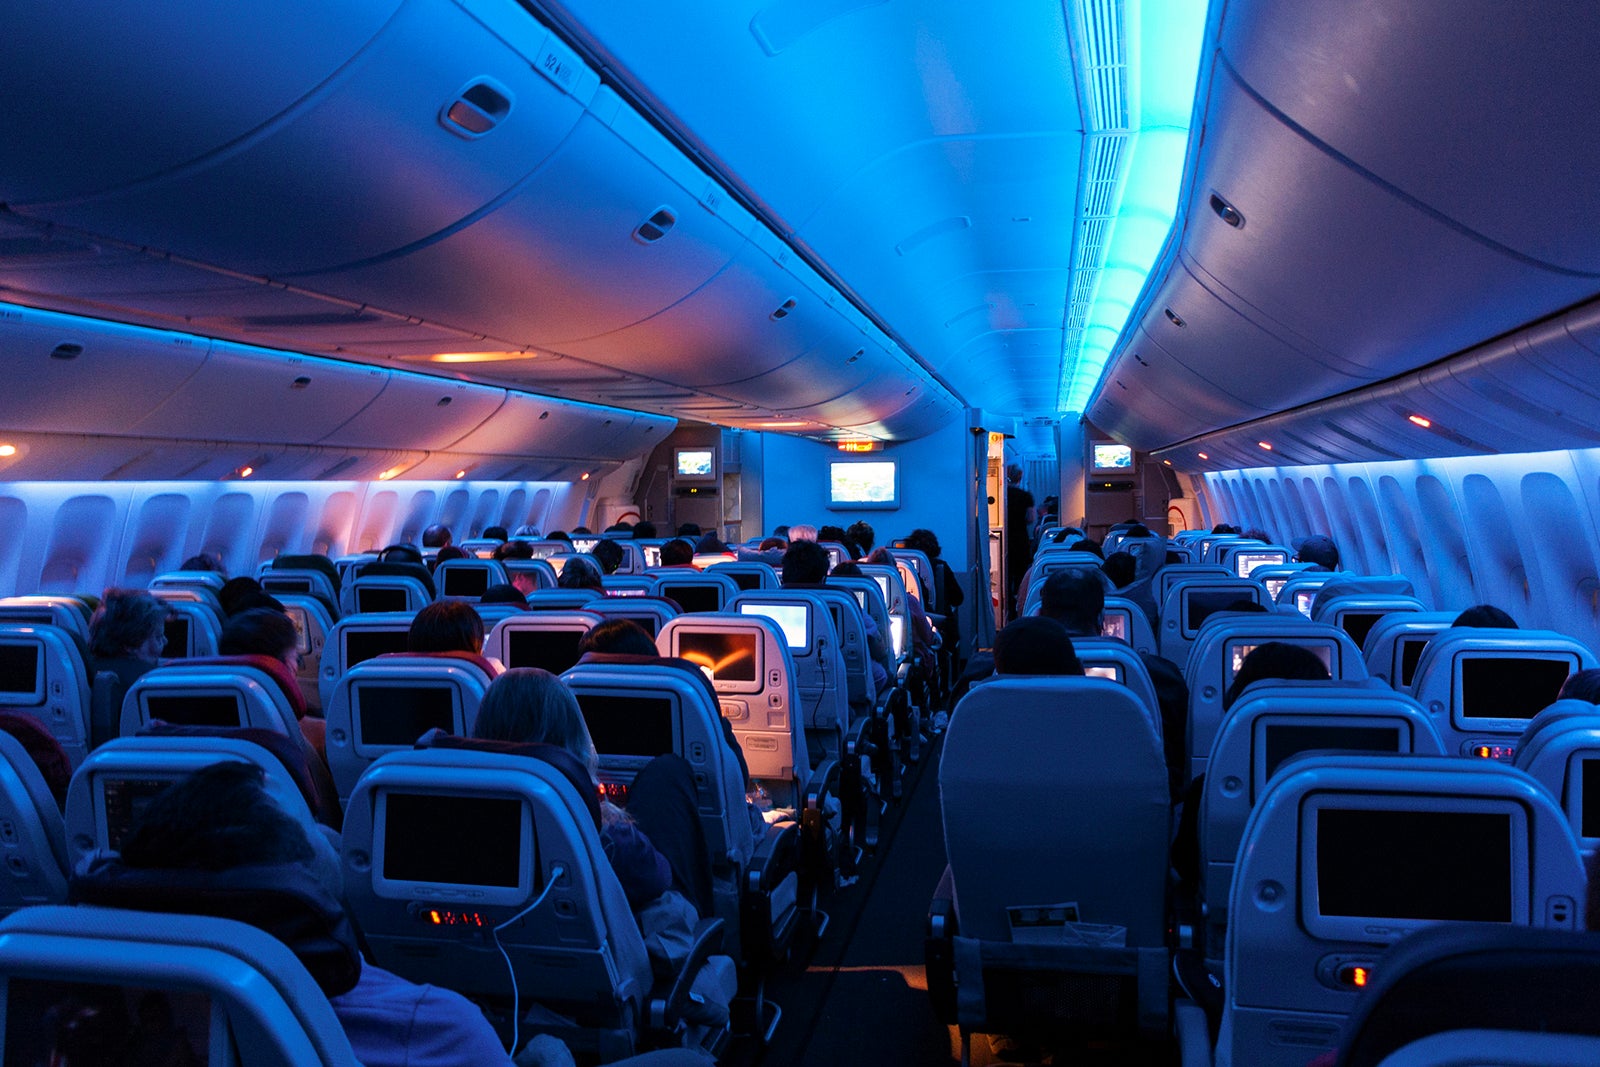 dimly lit interior of airplane with 3-3-3 seat arrangement